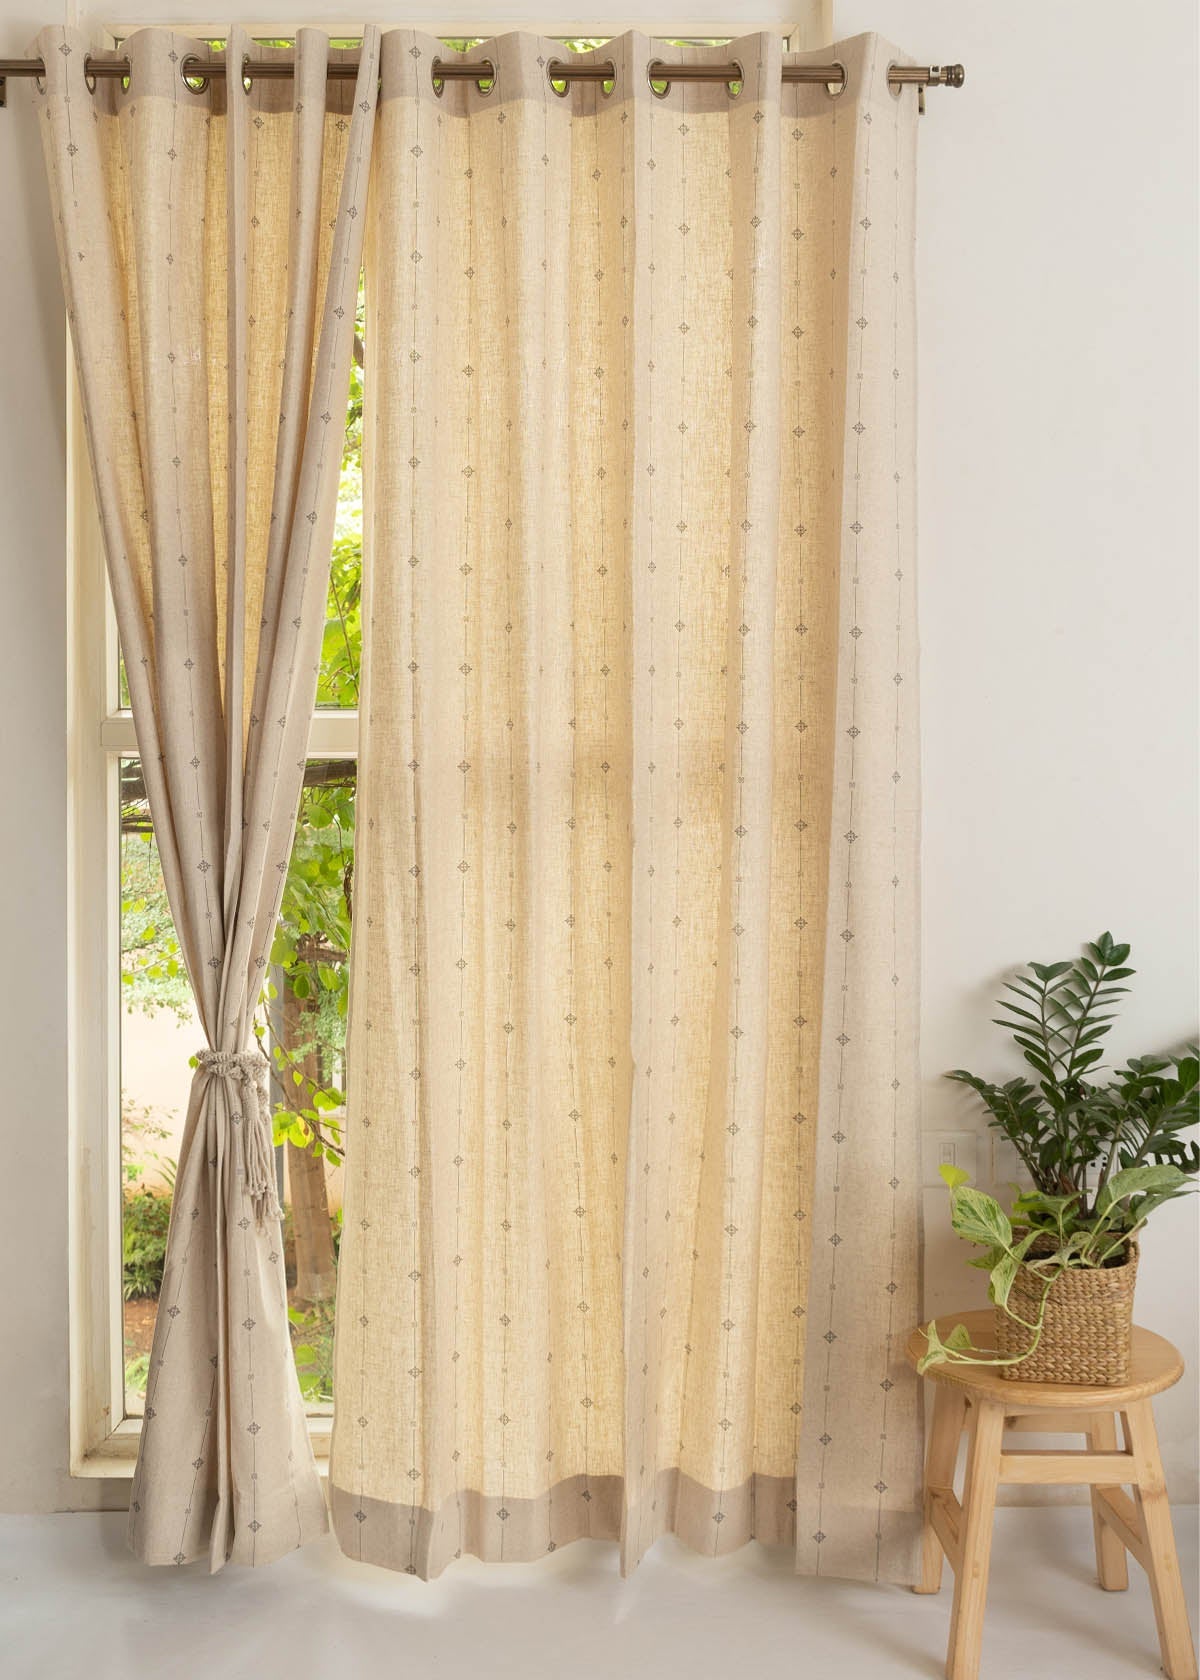 Tulsi linen 100% cotton ethnic curtain for Living room & bedroom - Room darkening  - Beige - Pack of 1